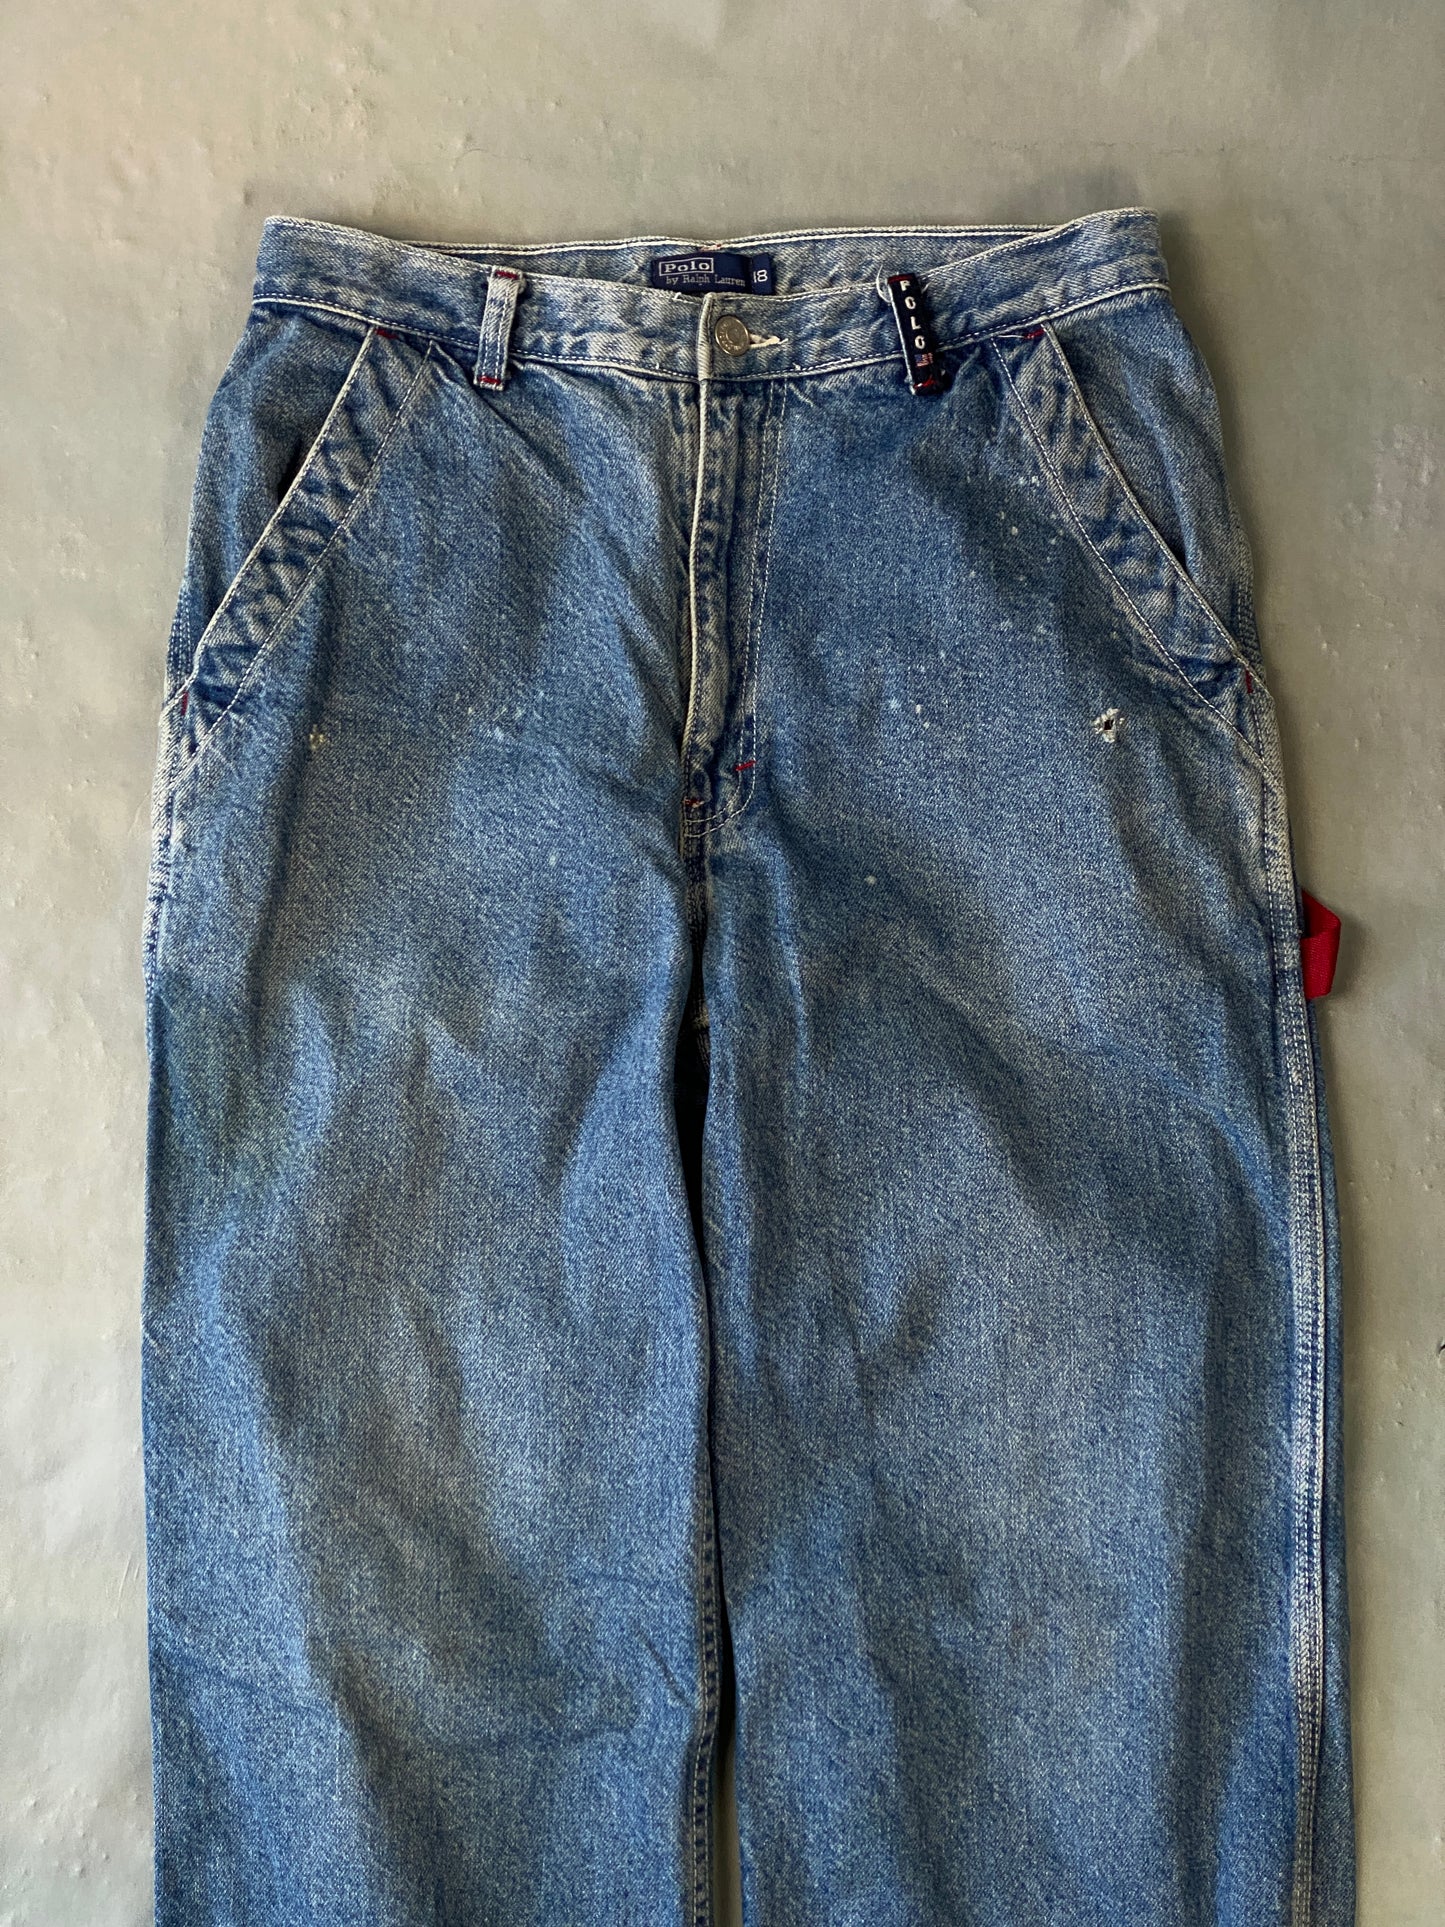 Levis Silvertab Vintage Baggy Jeans - 30x32